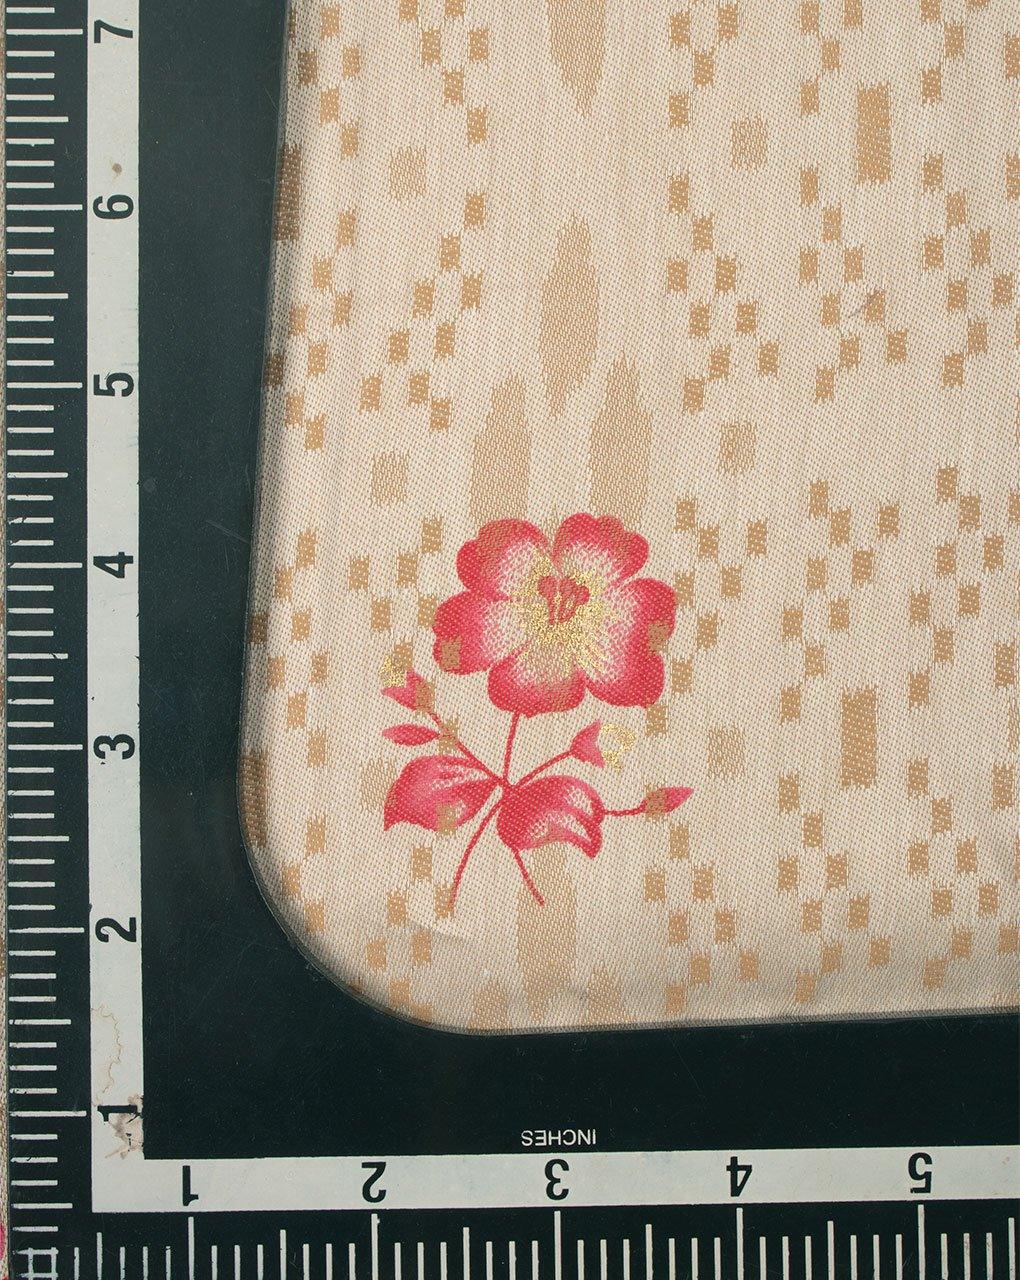 ( Pre-Cut 1.5 MTR ) Off-White Fuchsia Floral Pattern Jacquard Screen Print Cotton Fabric - Fabriclore.com